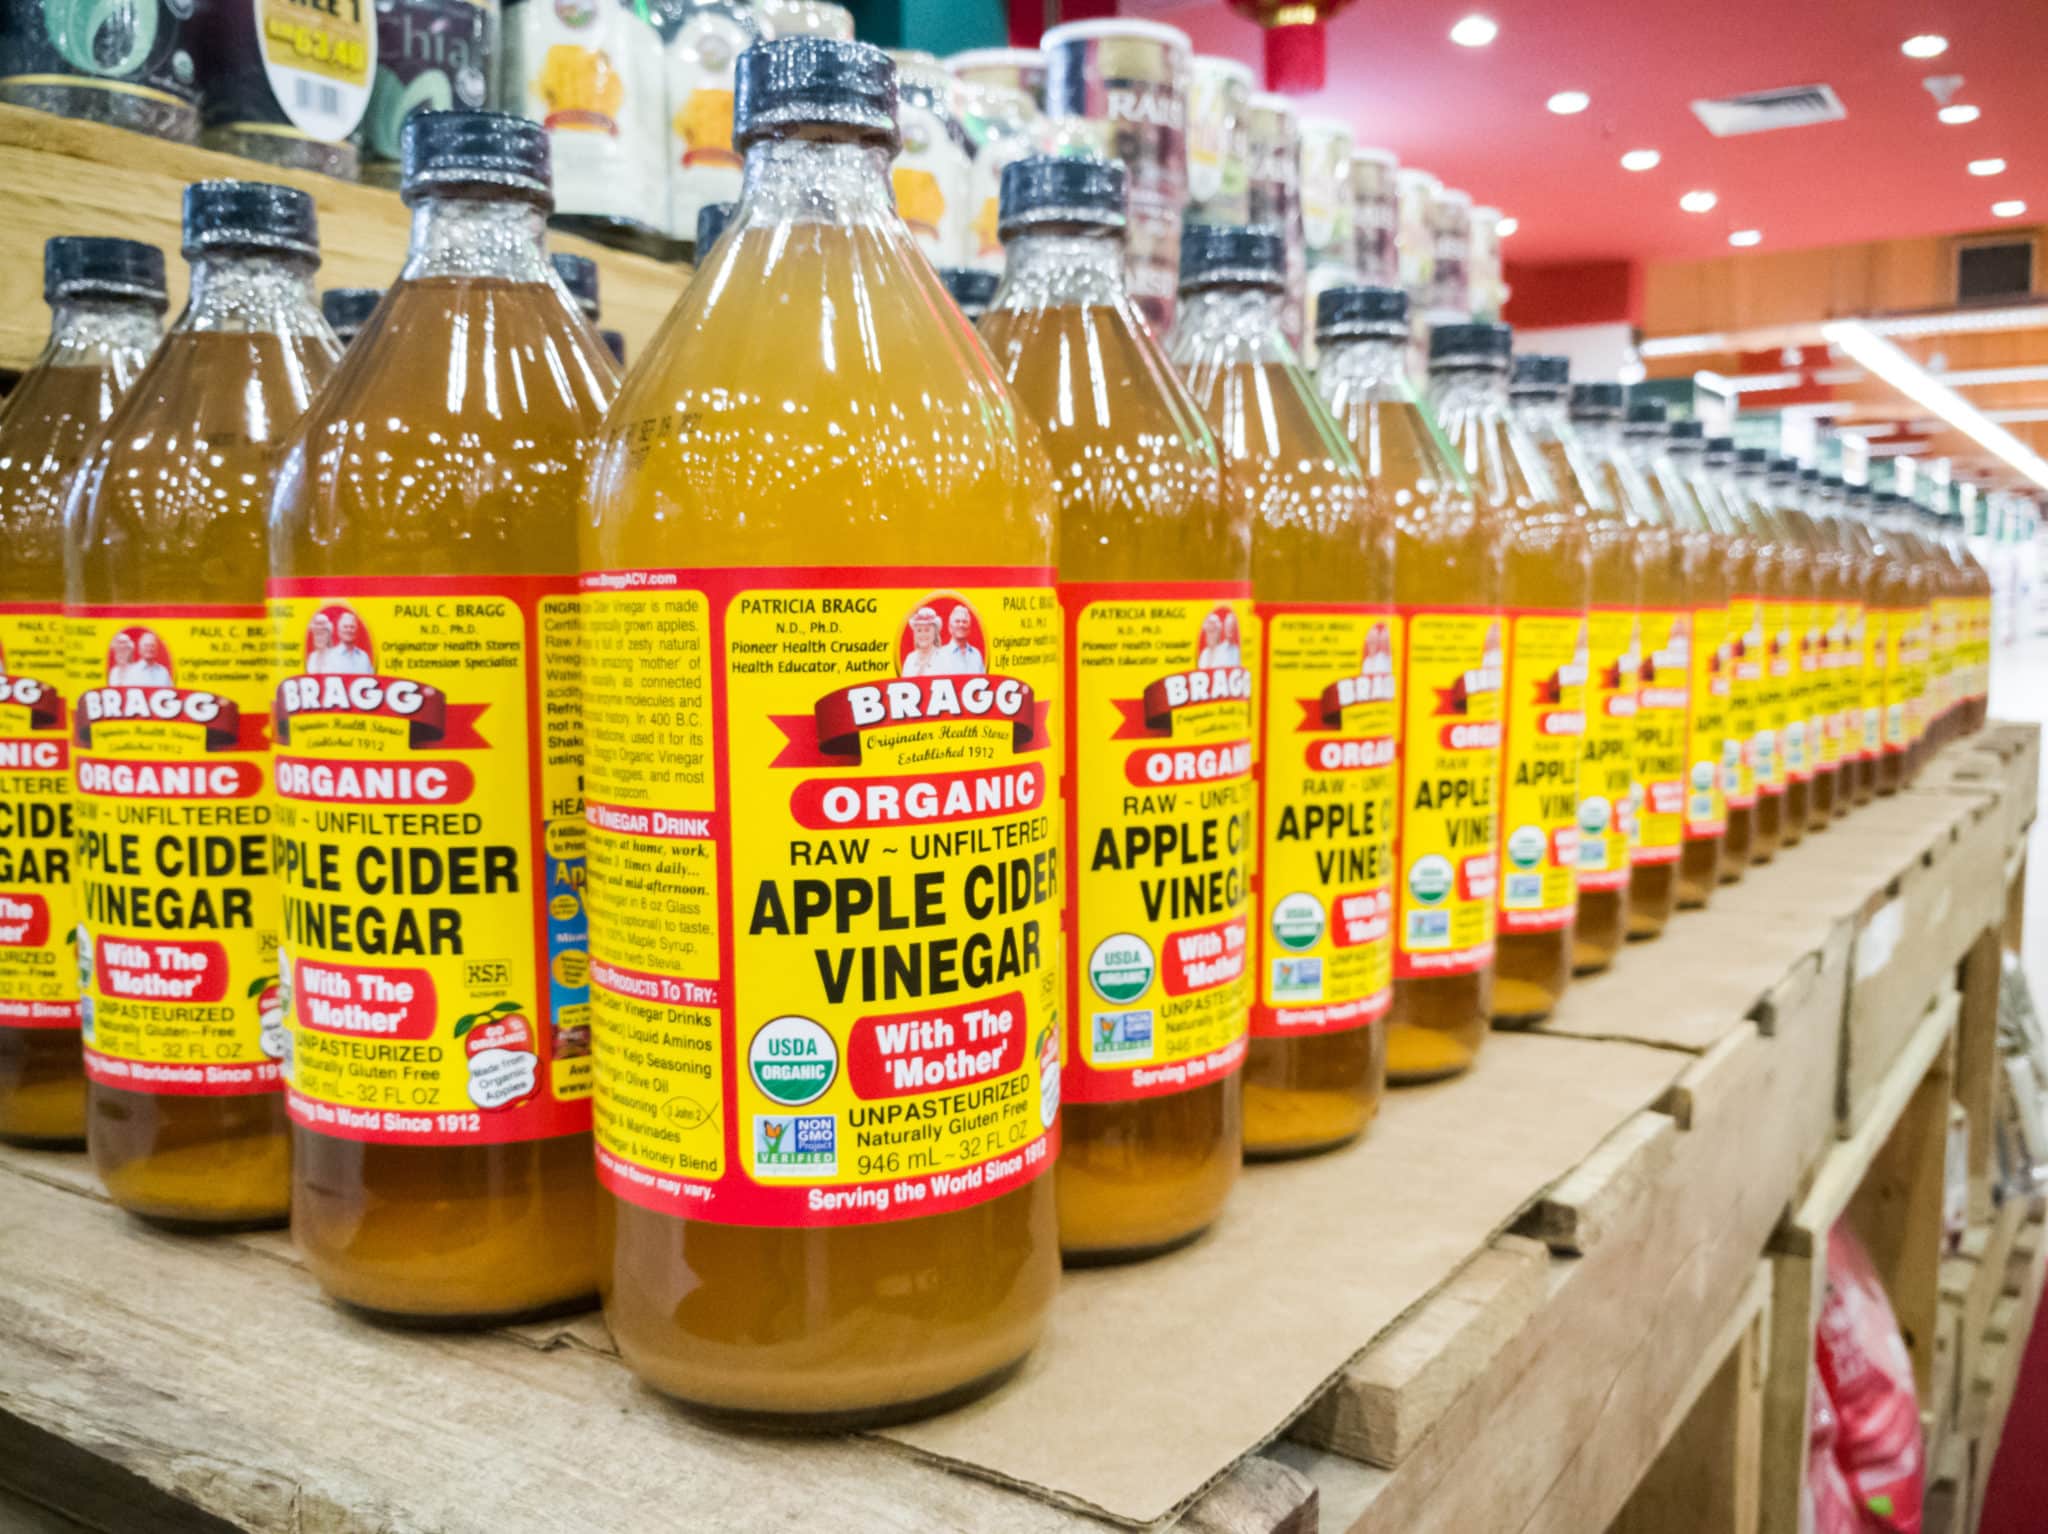 Bottles of Bragg's Organic Raw Apple Cider Vinegar in the grocery store